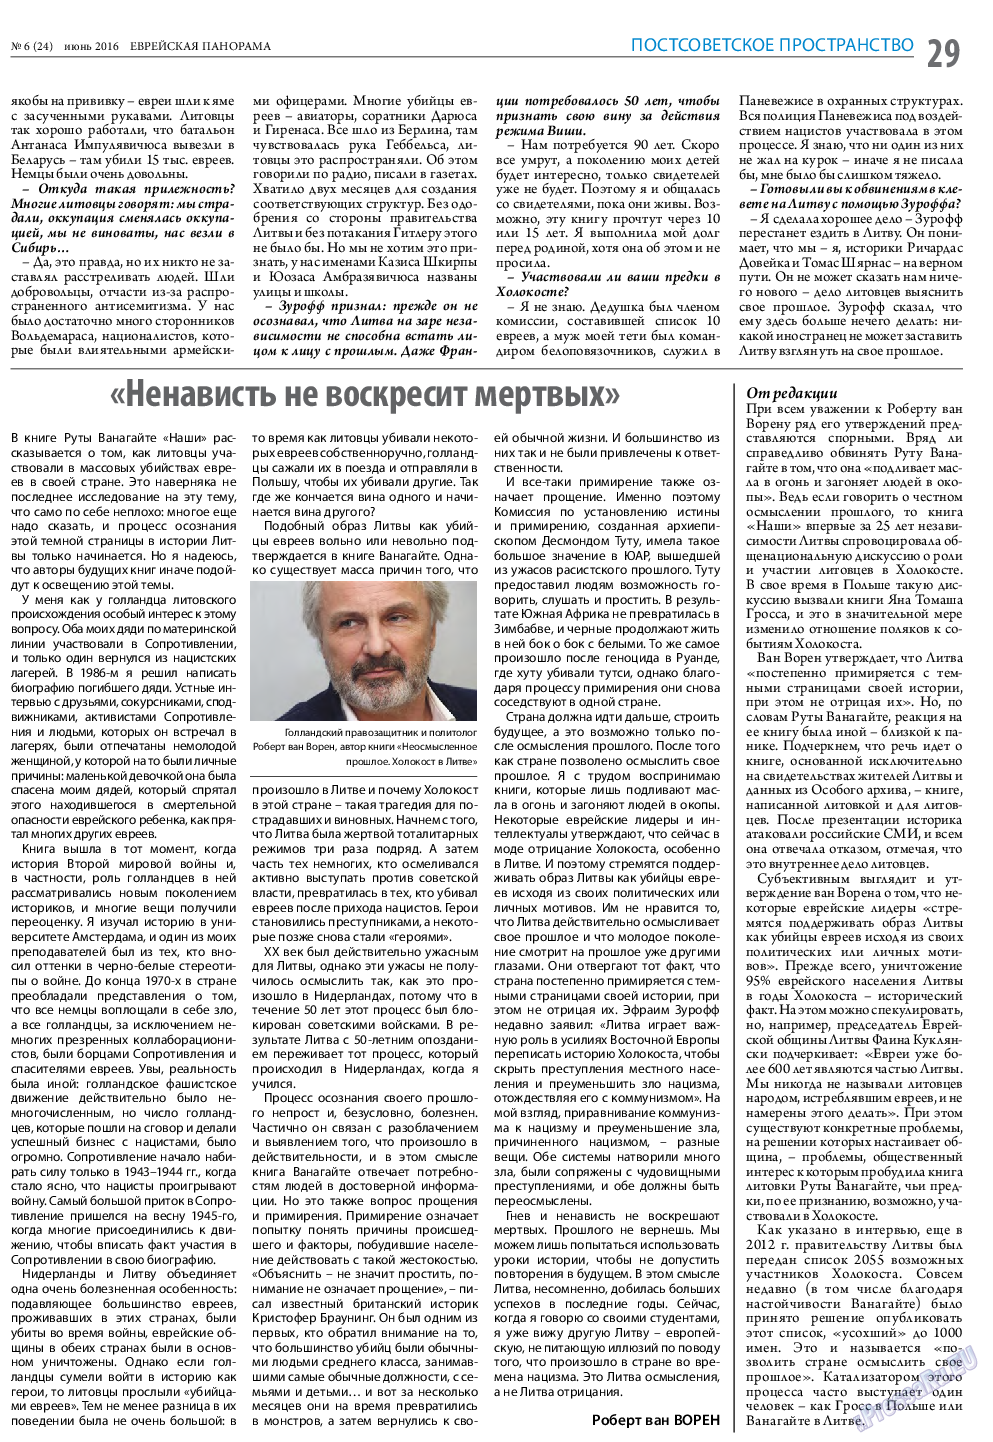 Еврейская панорама, газета. 2016 №6 стр.29